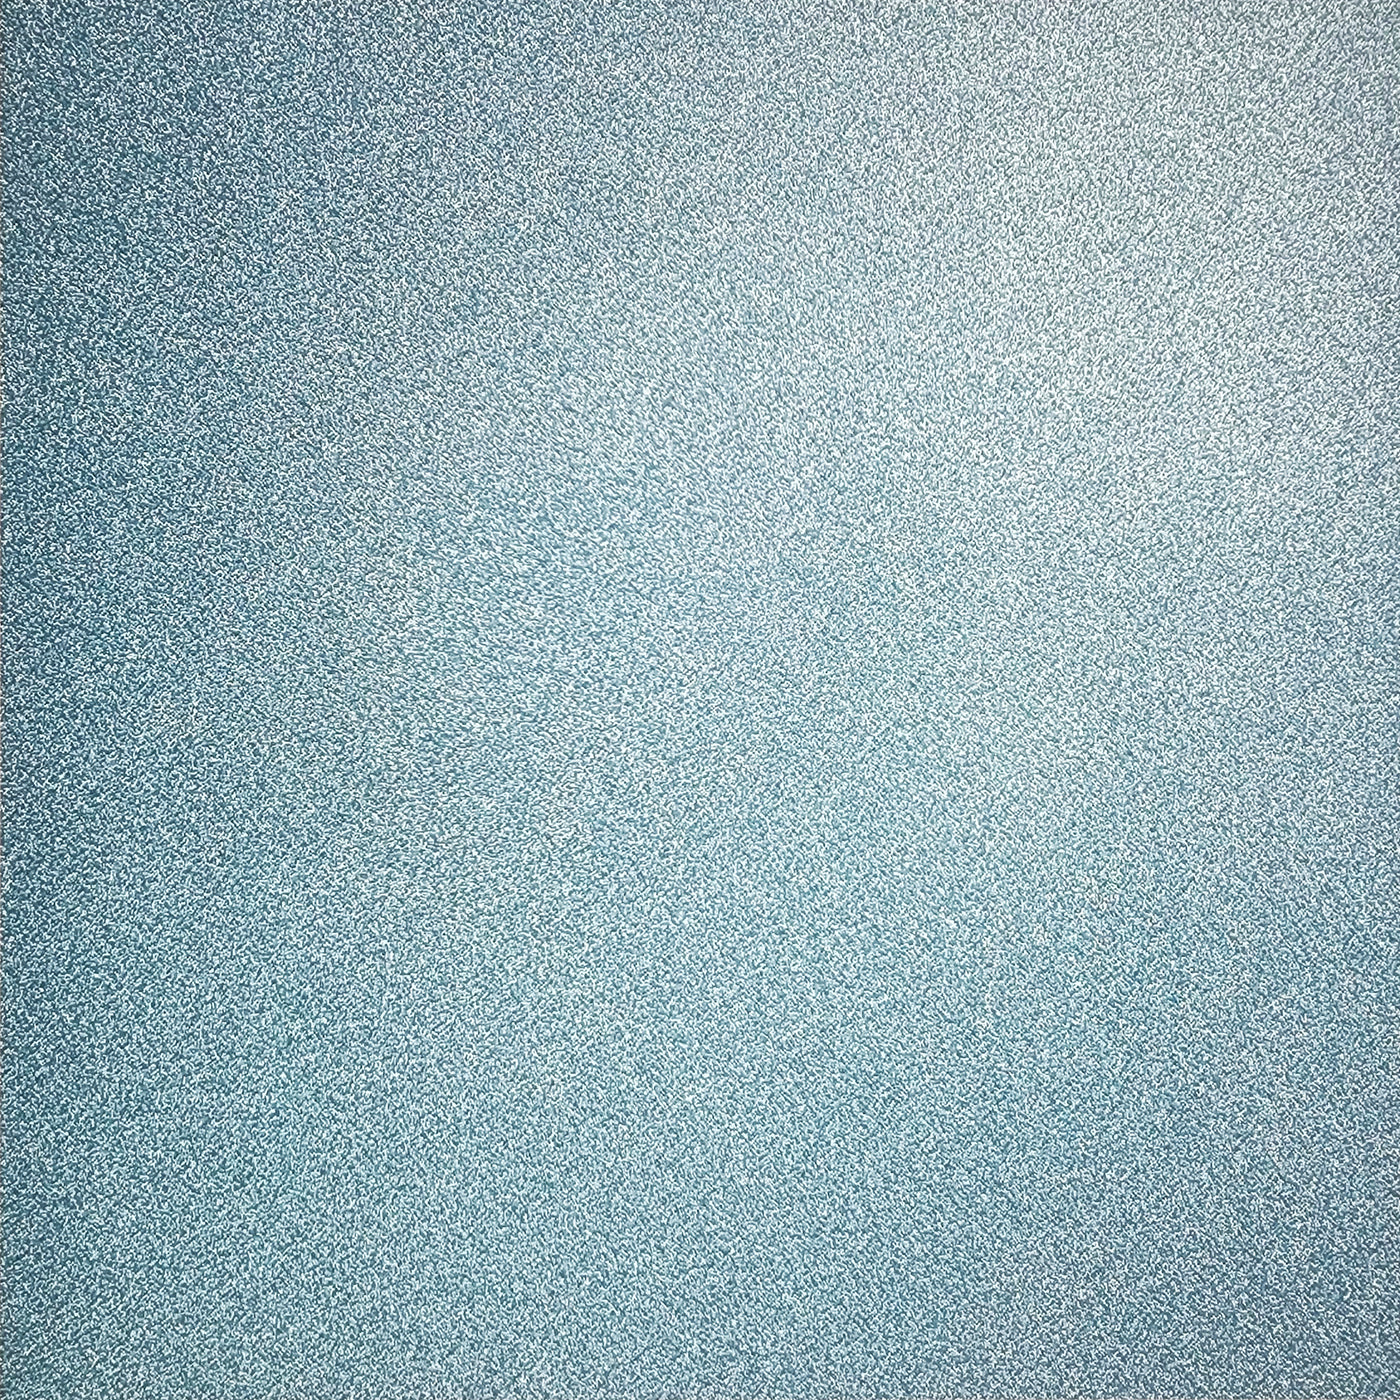 MARINE Pow! Glitter Paper - blue 12x12 glitter cardstock - American Crafts